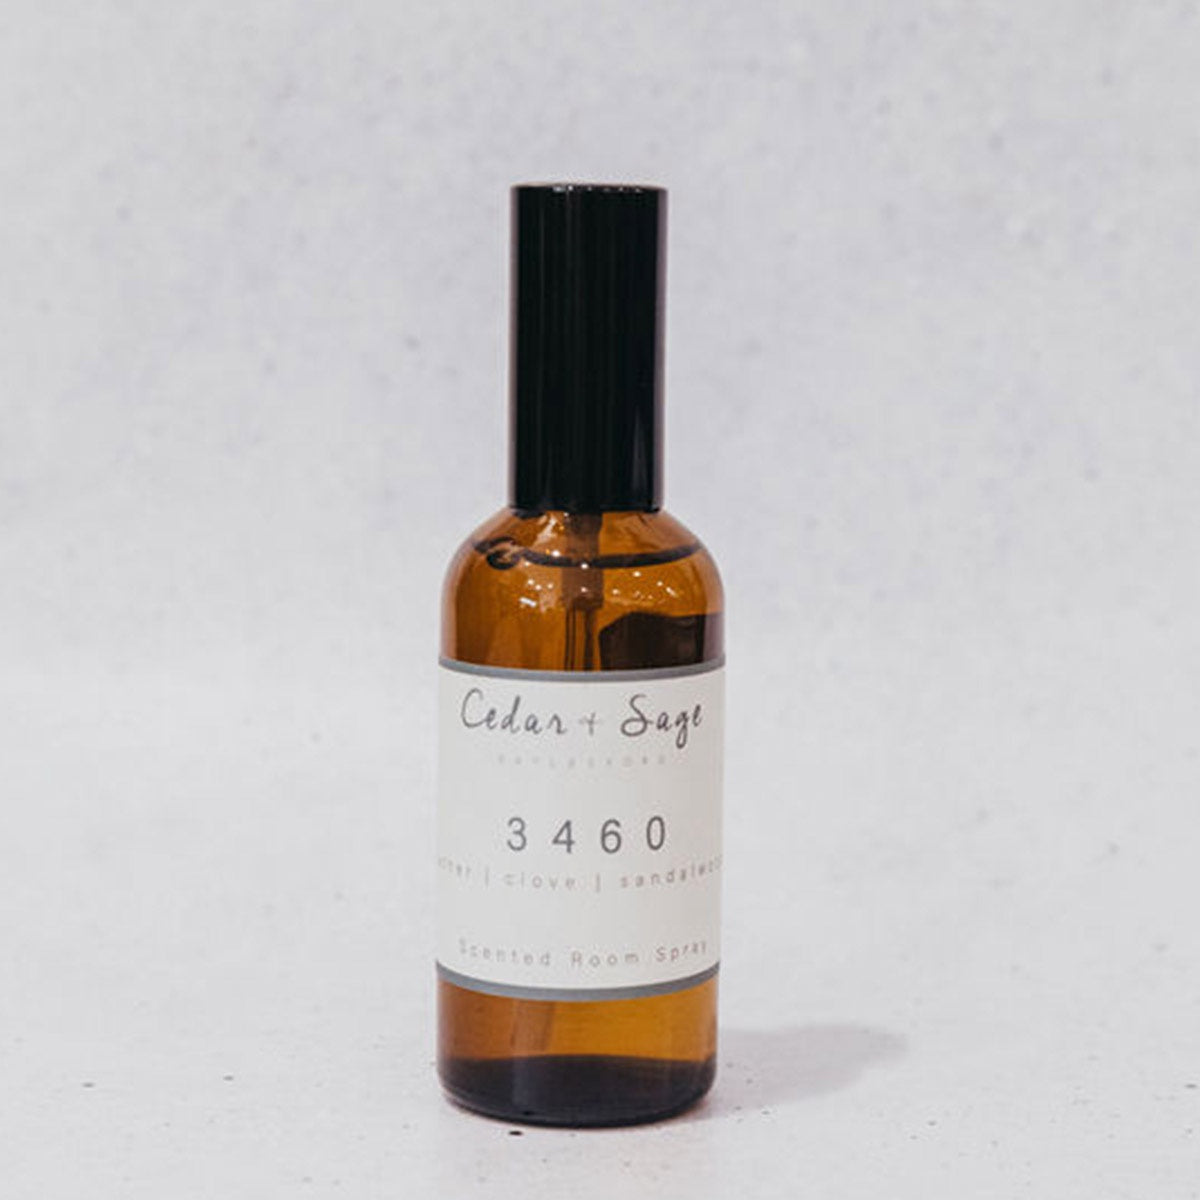 Cedar and Sage Room Spray - 3460